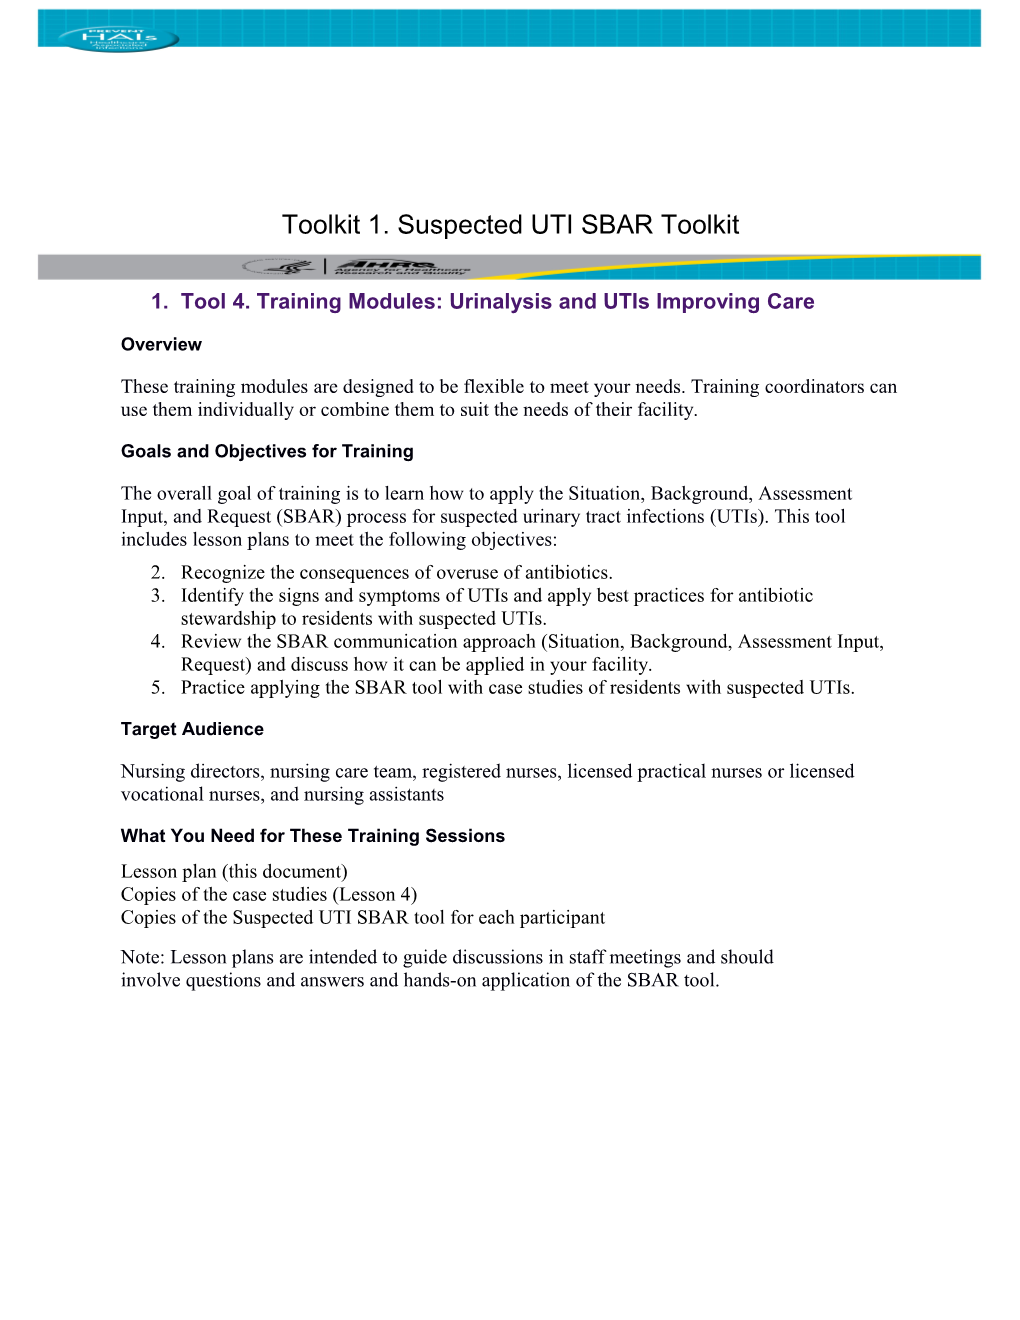 Tool 4. Training Modules: Urinalysis and Utis Improving Care